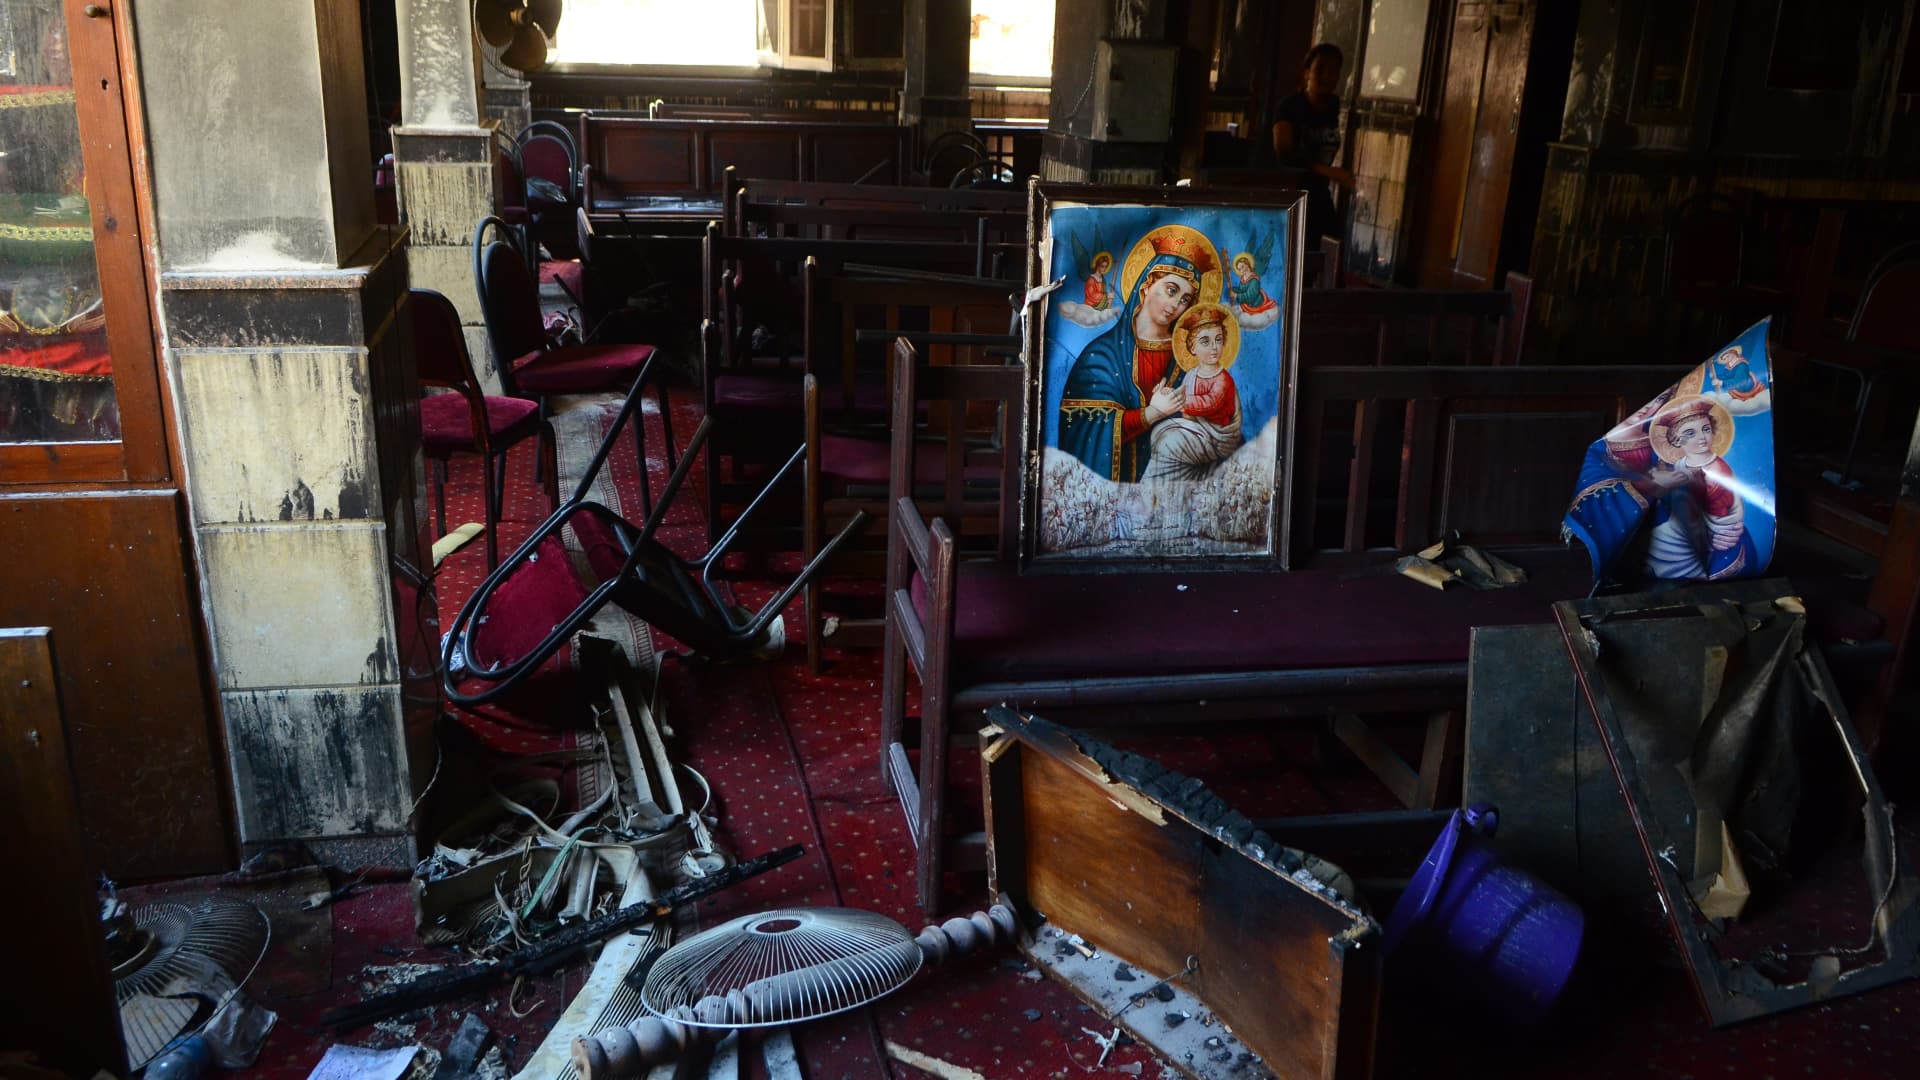 Fire at Coptic church in Cairo kills 41, hurts 14